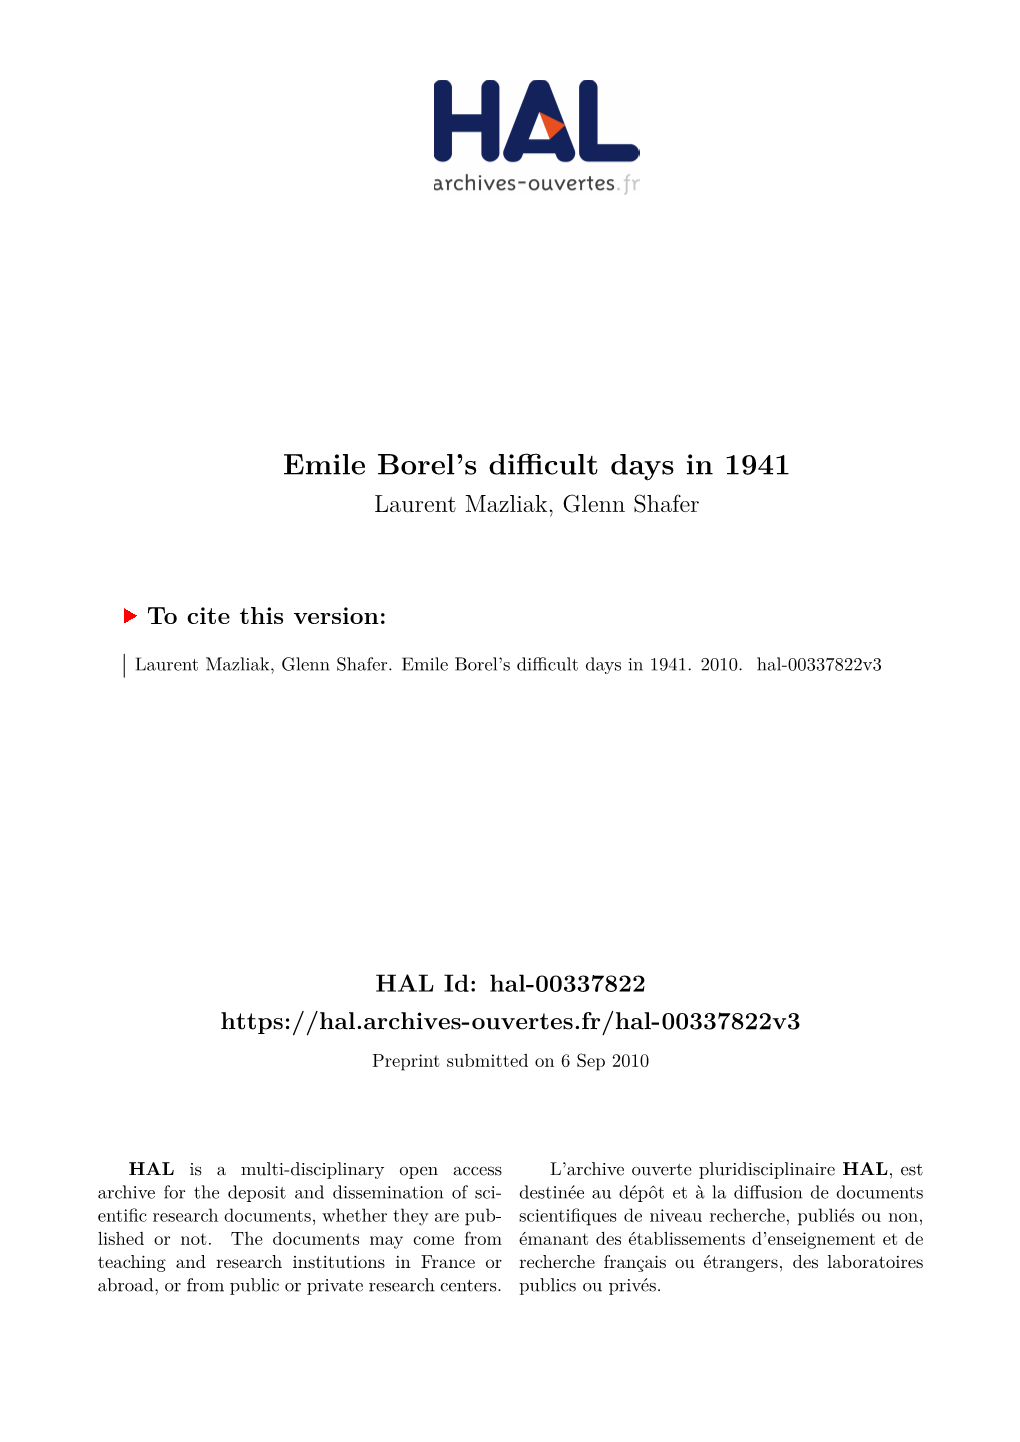 Emile Borel's Difficult Days in 1941